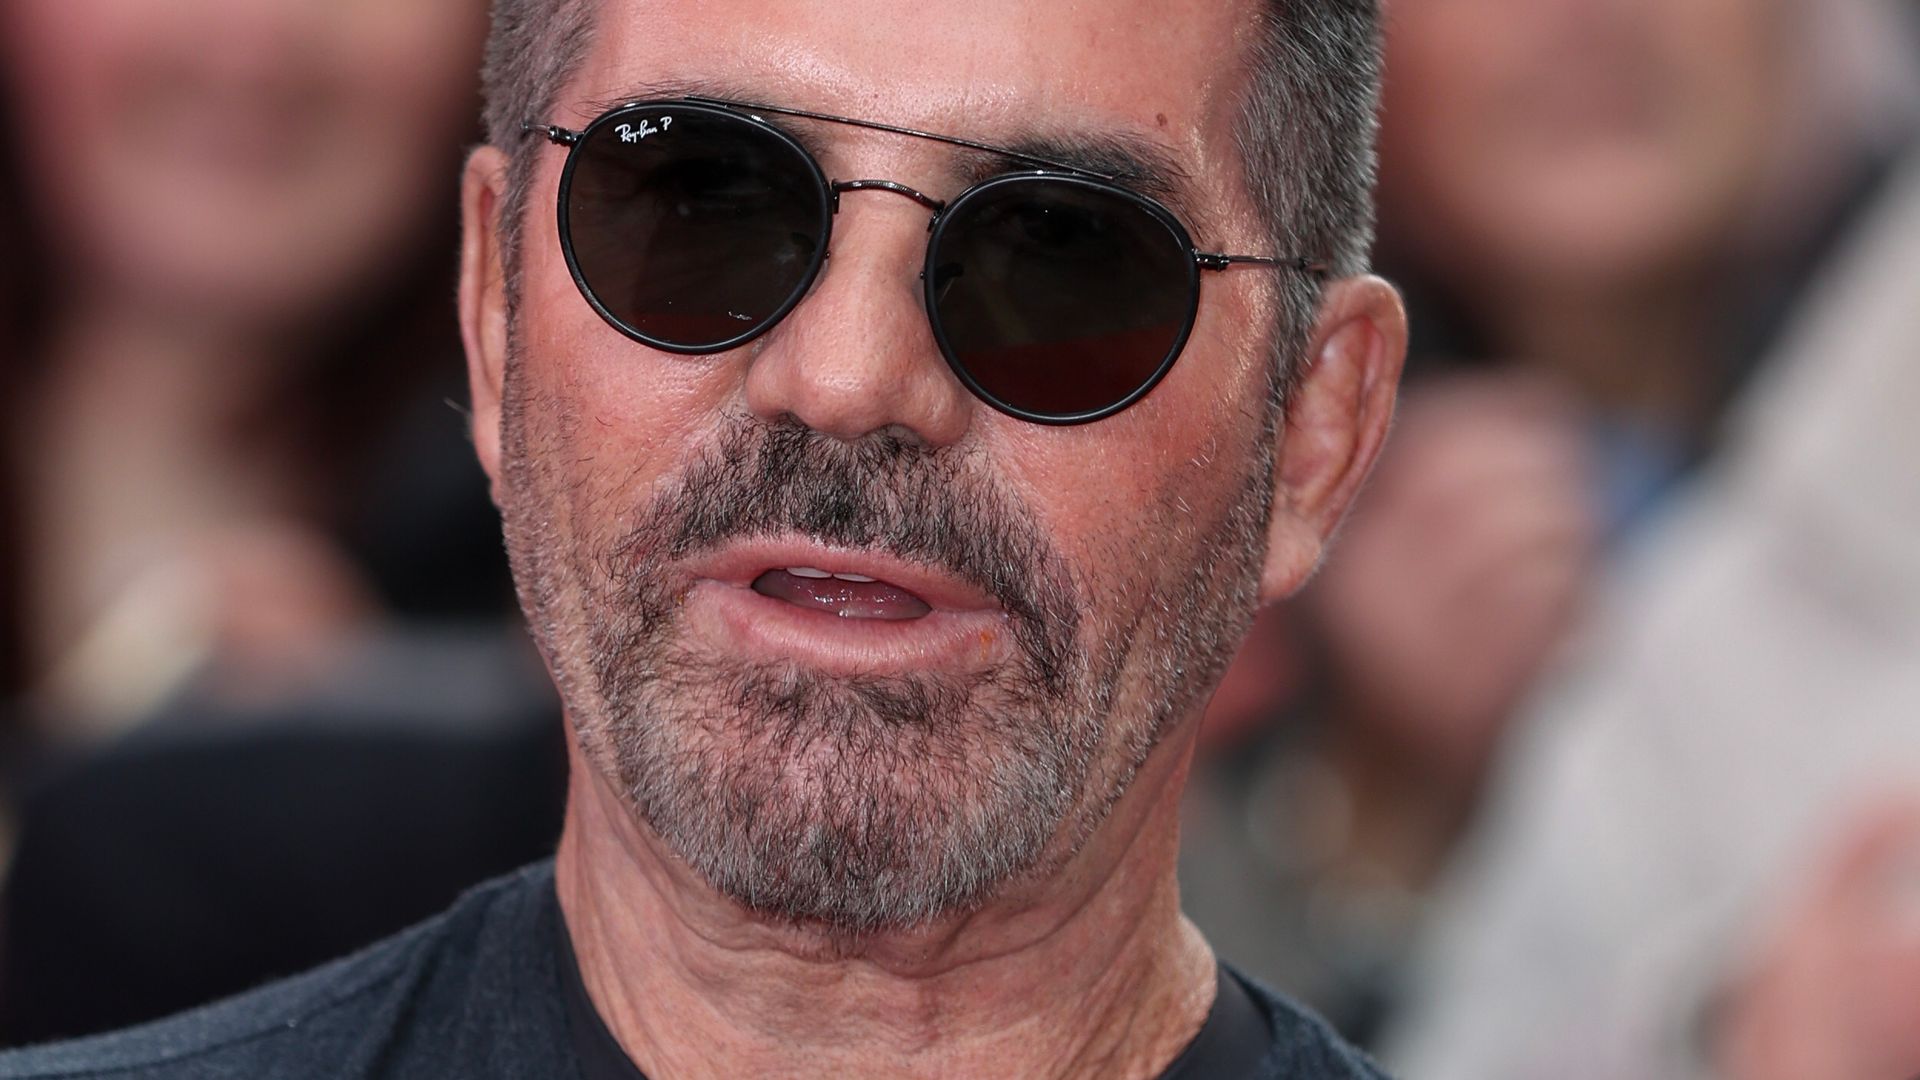 Simon Cowell wearing sunglasses and a dark grey tshirt